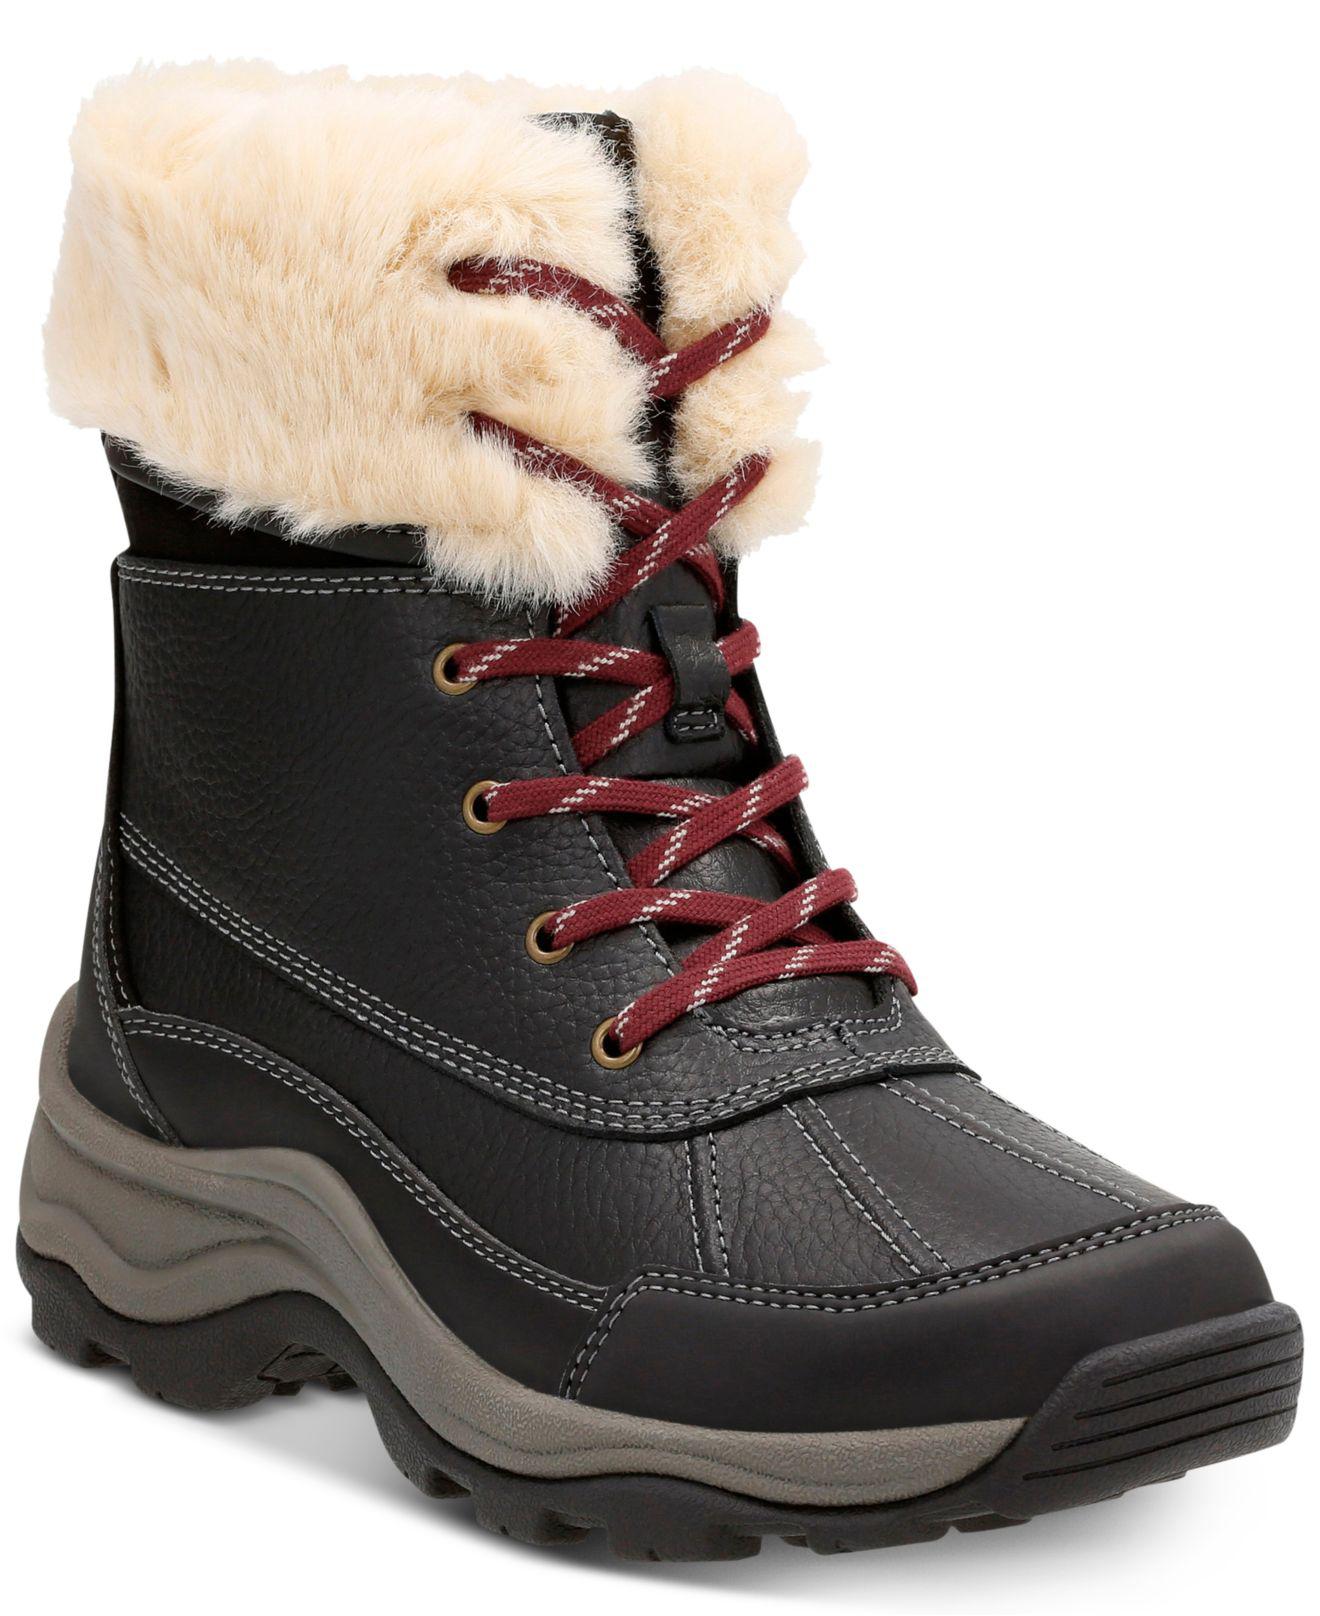 clarks arctic snow boots